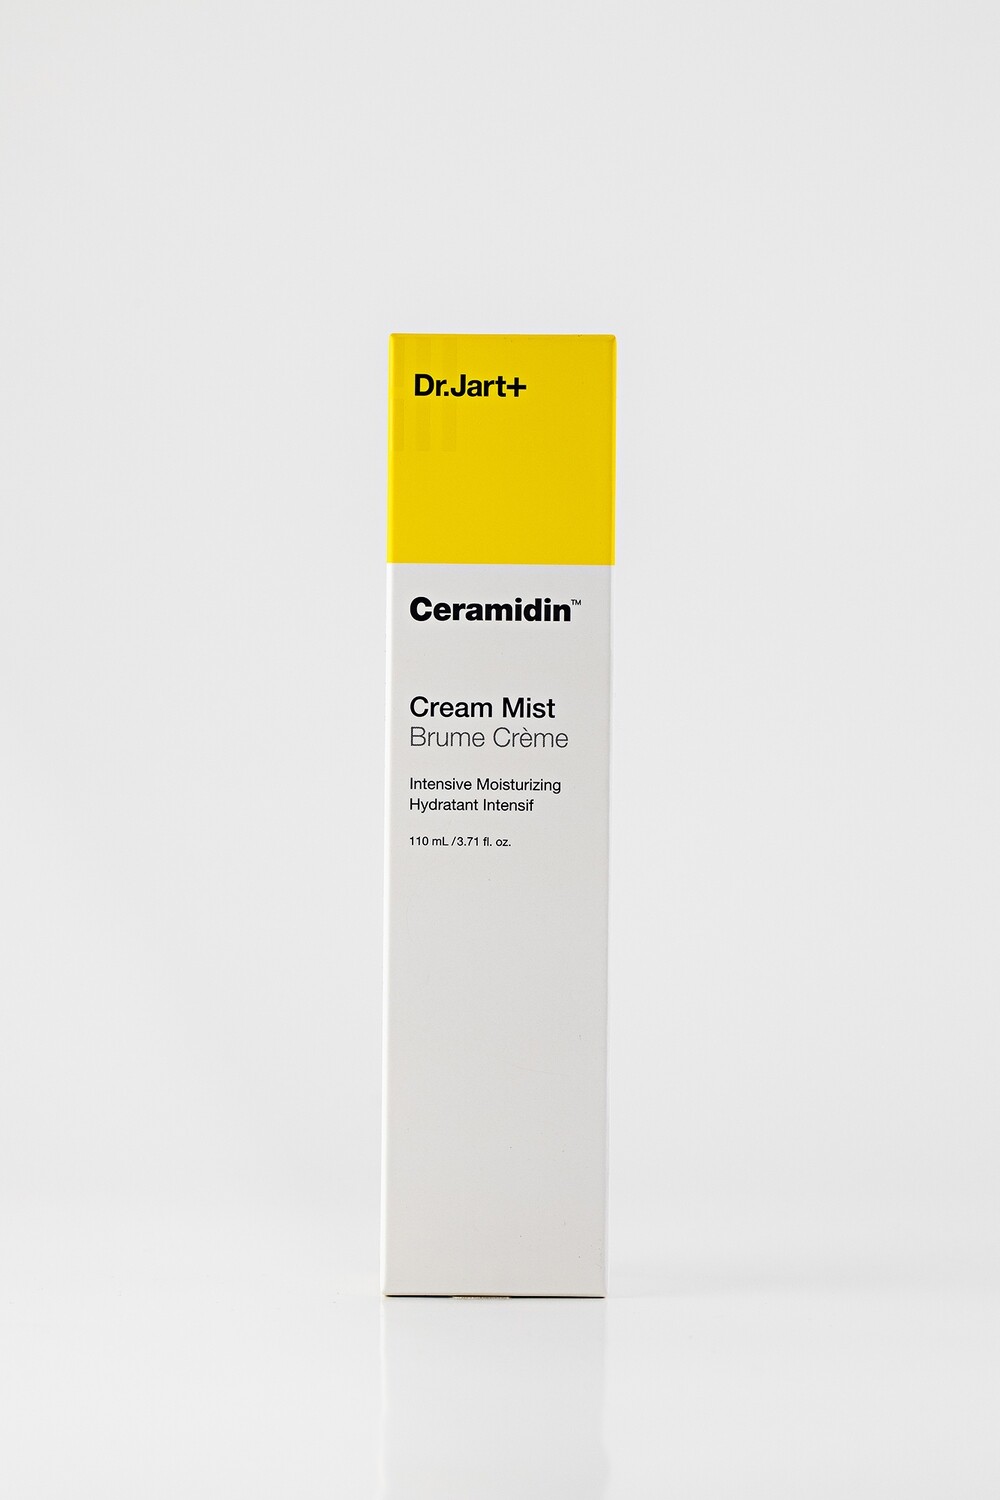 Dr.Jart+ Ceramidin Cream Mist: 5-Cera Complex